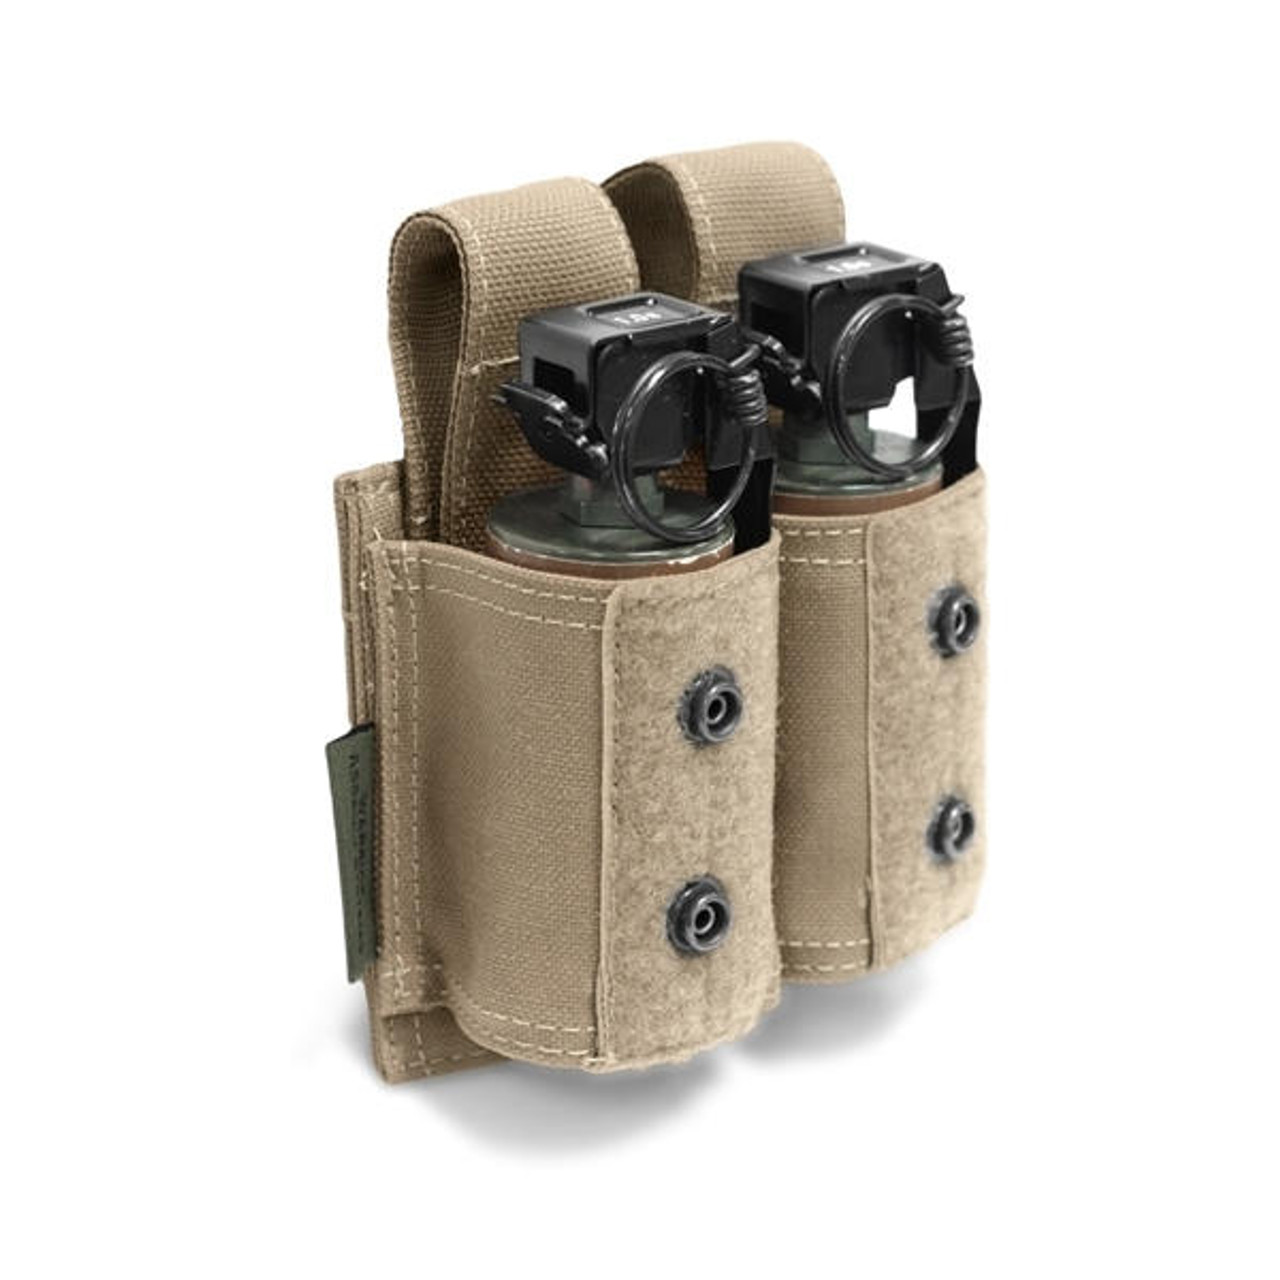 TT 2 SGL Flashbang Pouch IRR - Side pocket 40-mm grenades